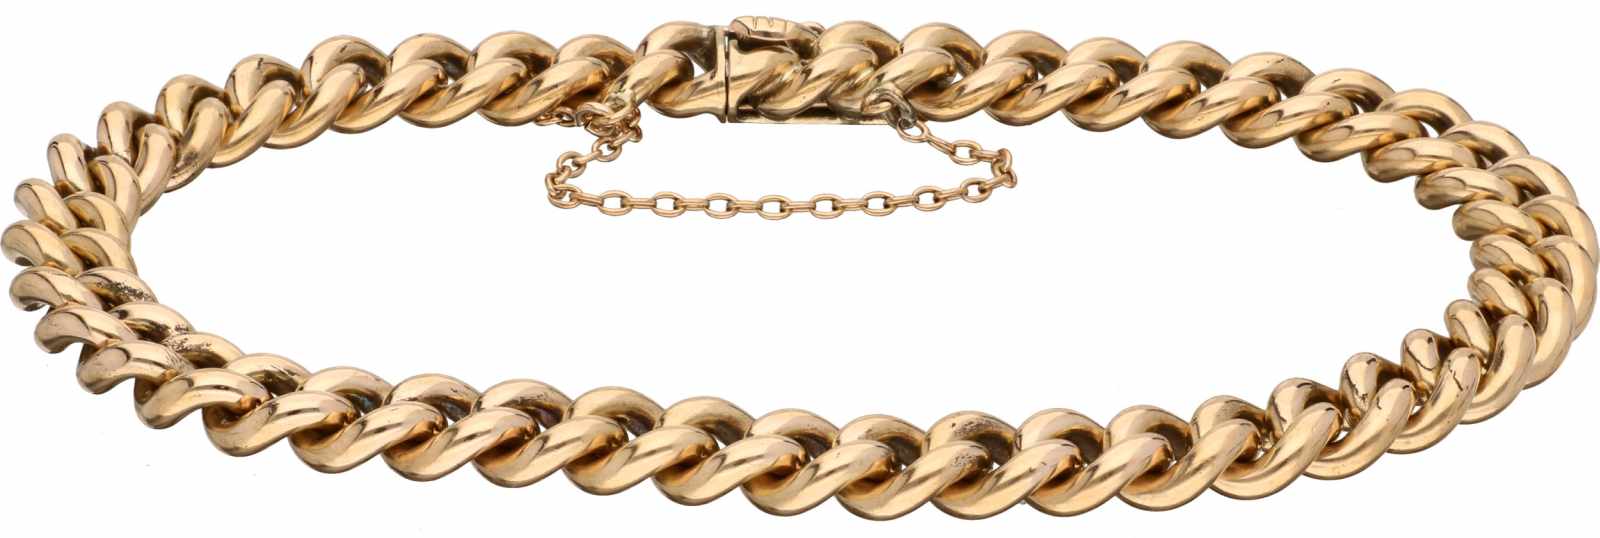 Gourmet chain bracelet yellow gold - 14 ct.